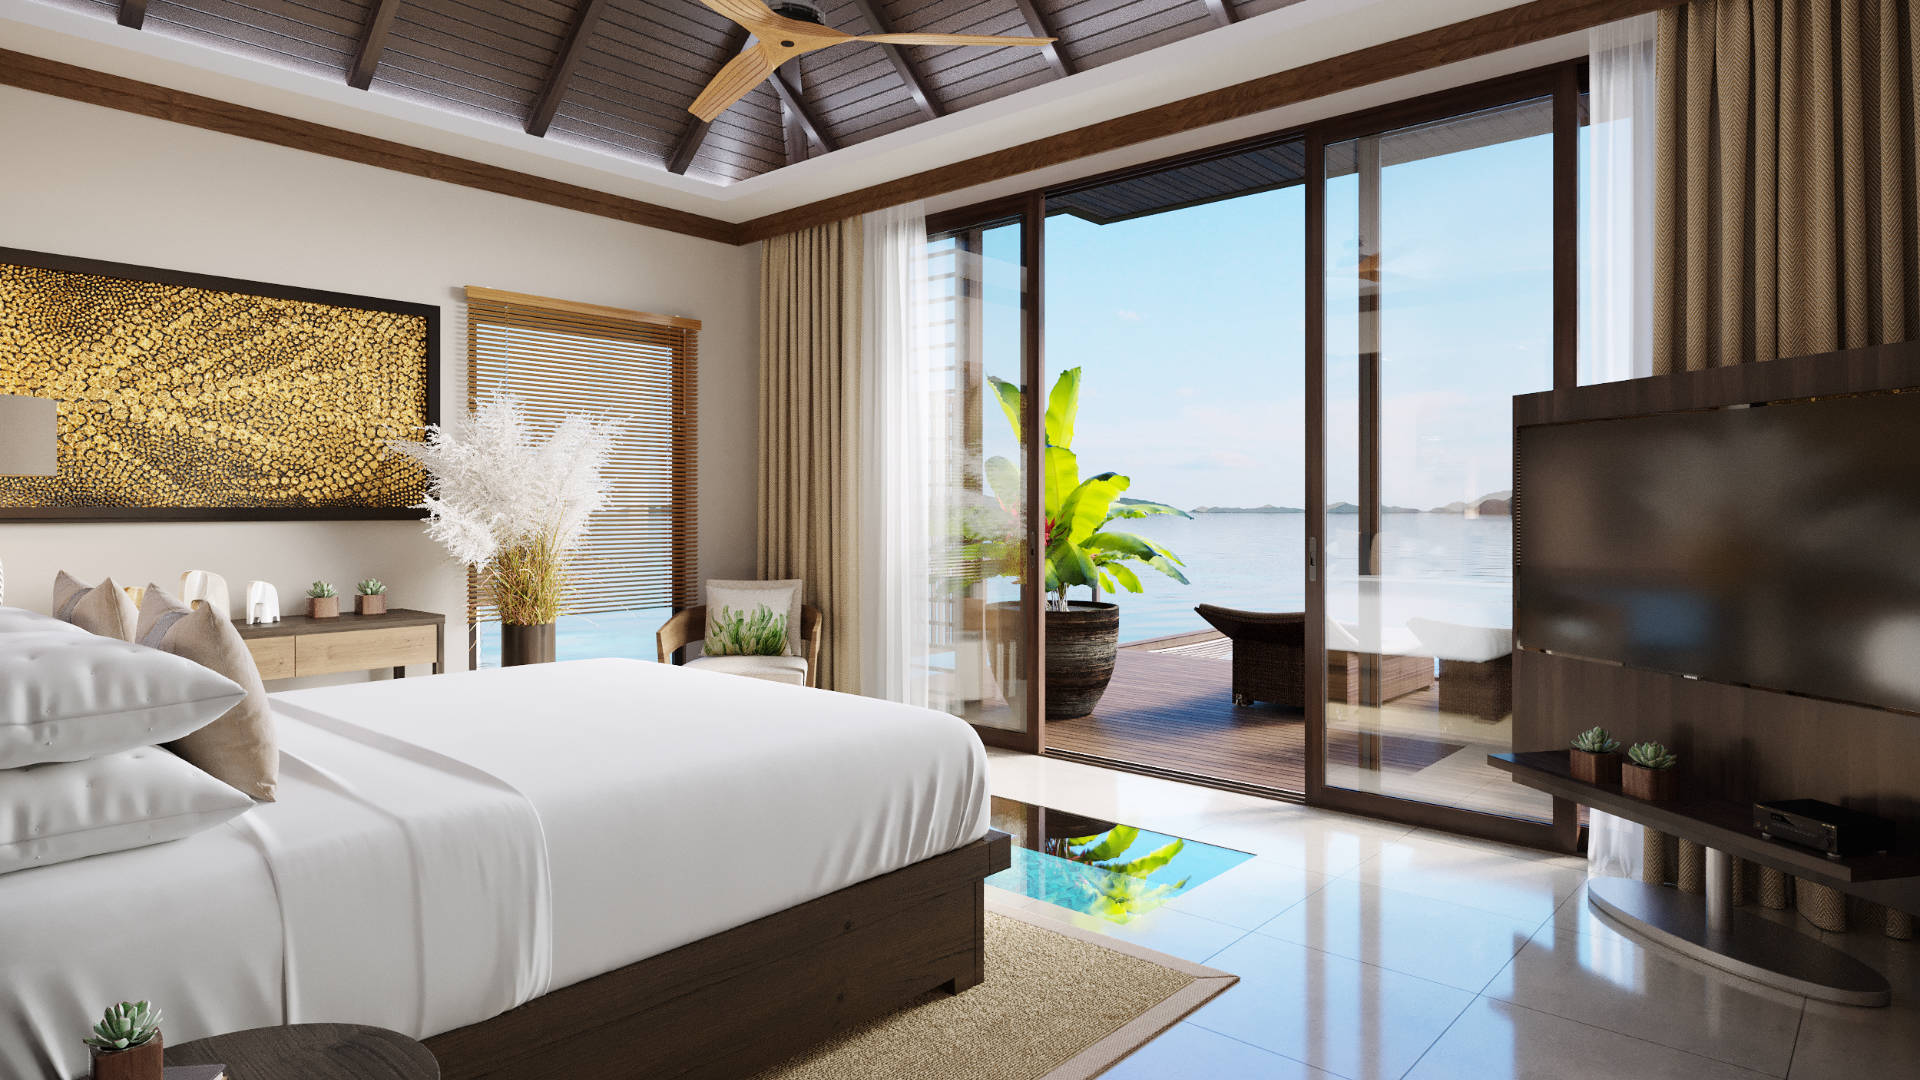 The Pavilions El Nido, Palawan Island – Overwater Villa Bedroom View